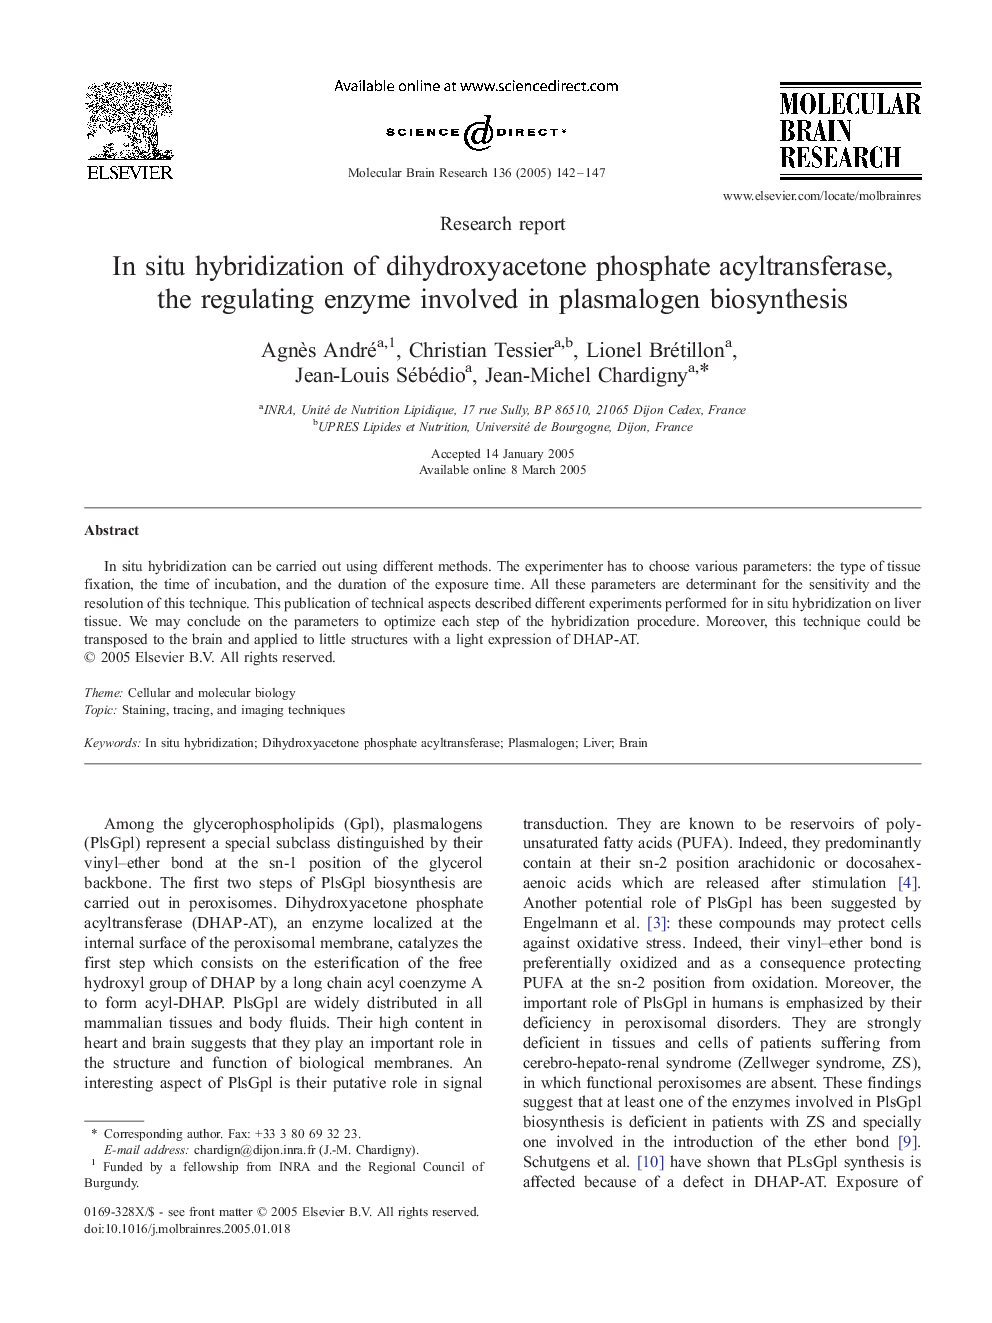 In situ hybridization of dihydroxyacetone phosphate acyltransferase, the regulating enzyme involved in plasmalogen biosynthesis